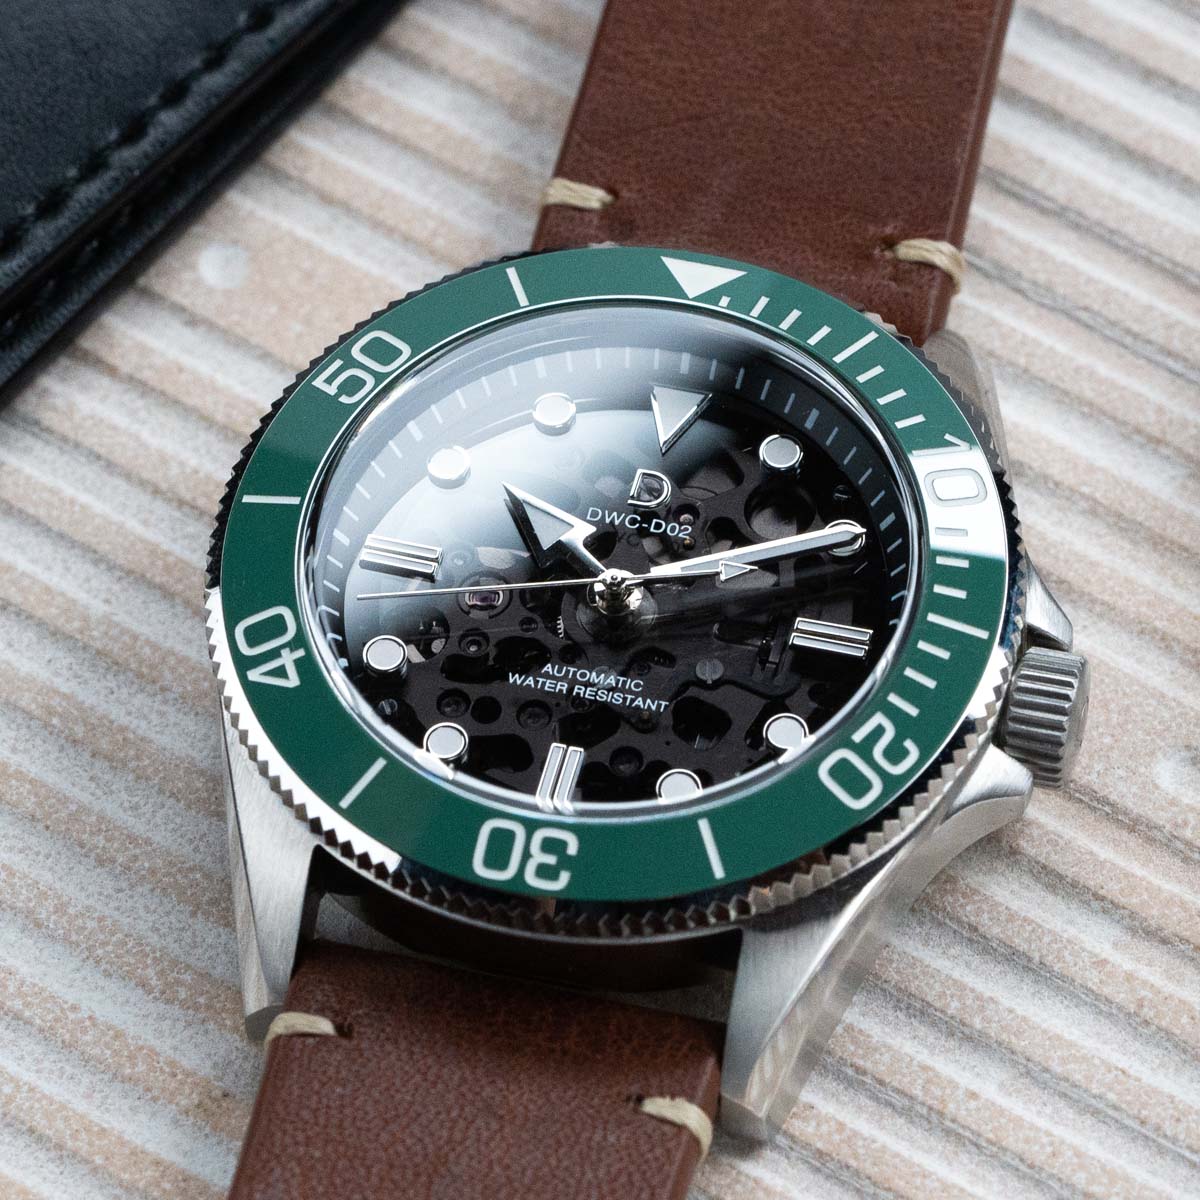 DIY腕錶組裝套裝 | NH72 潛水腕錶 配藍寶石錶盤及綠色陶瓷材質片圈 | DWC-D02S 